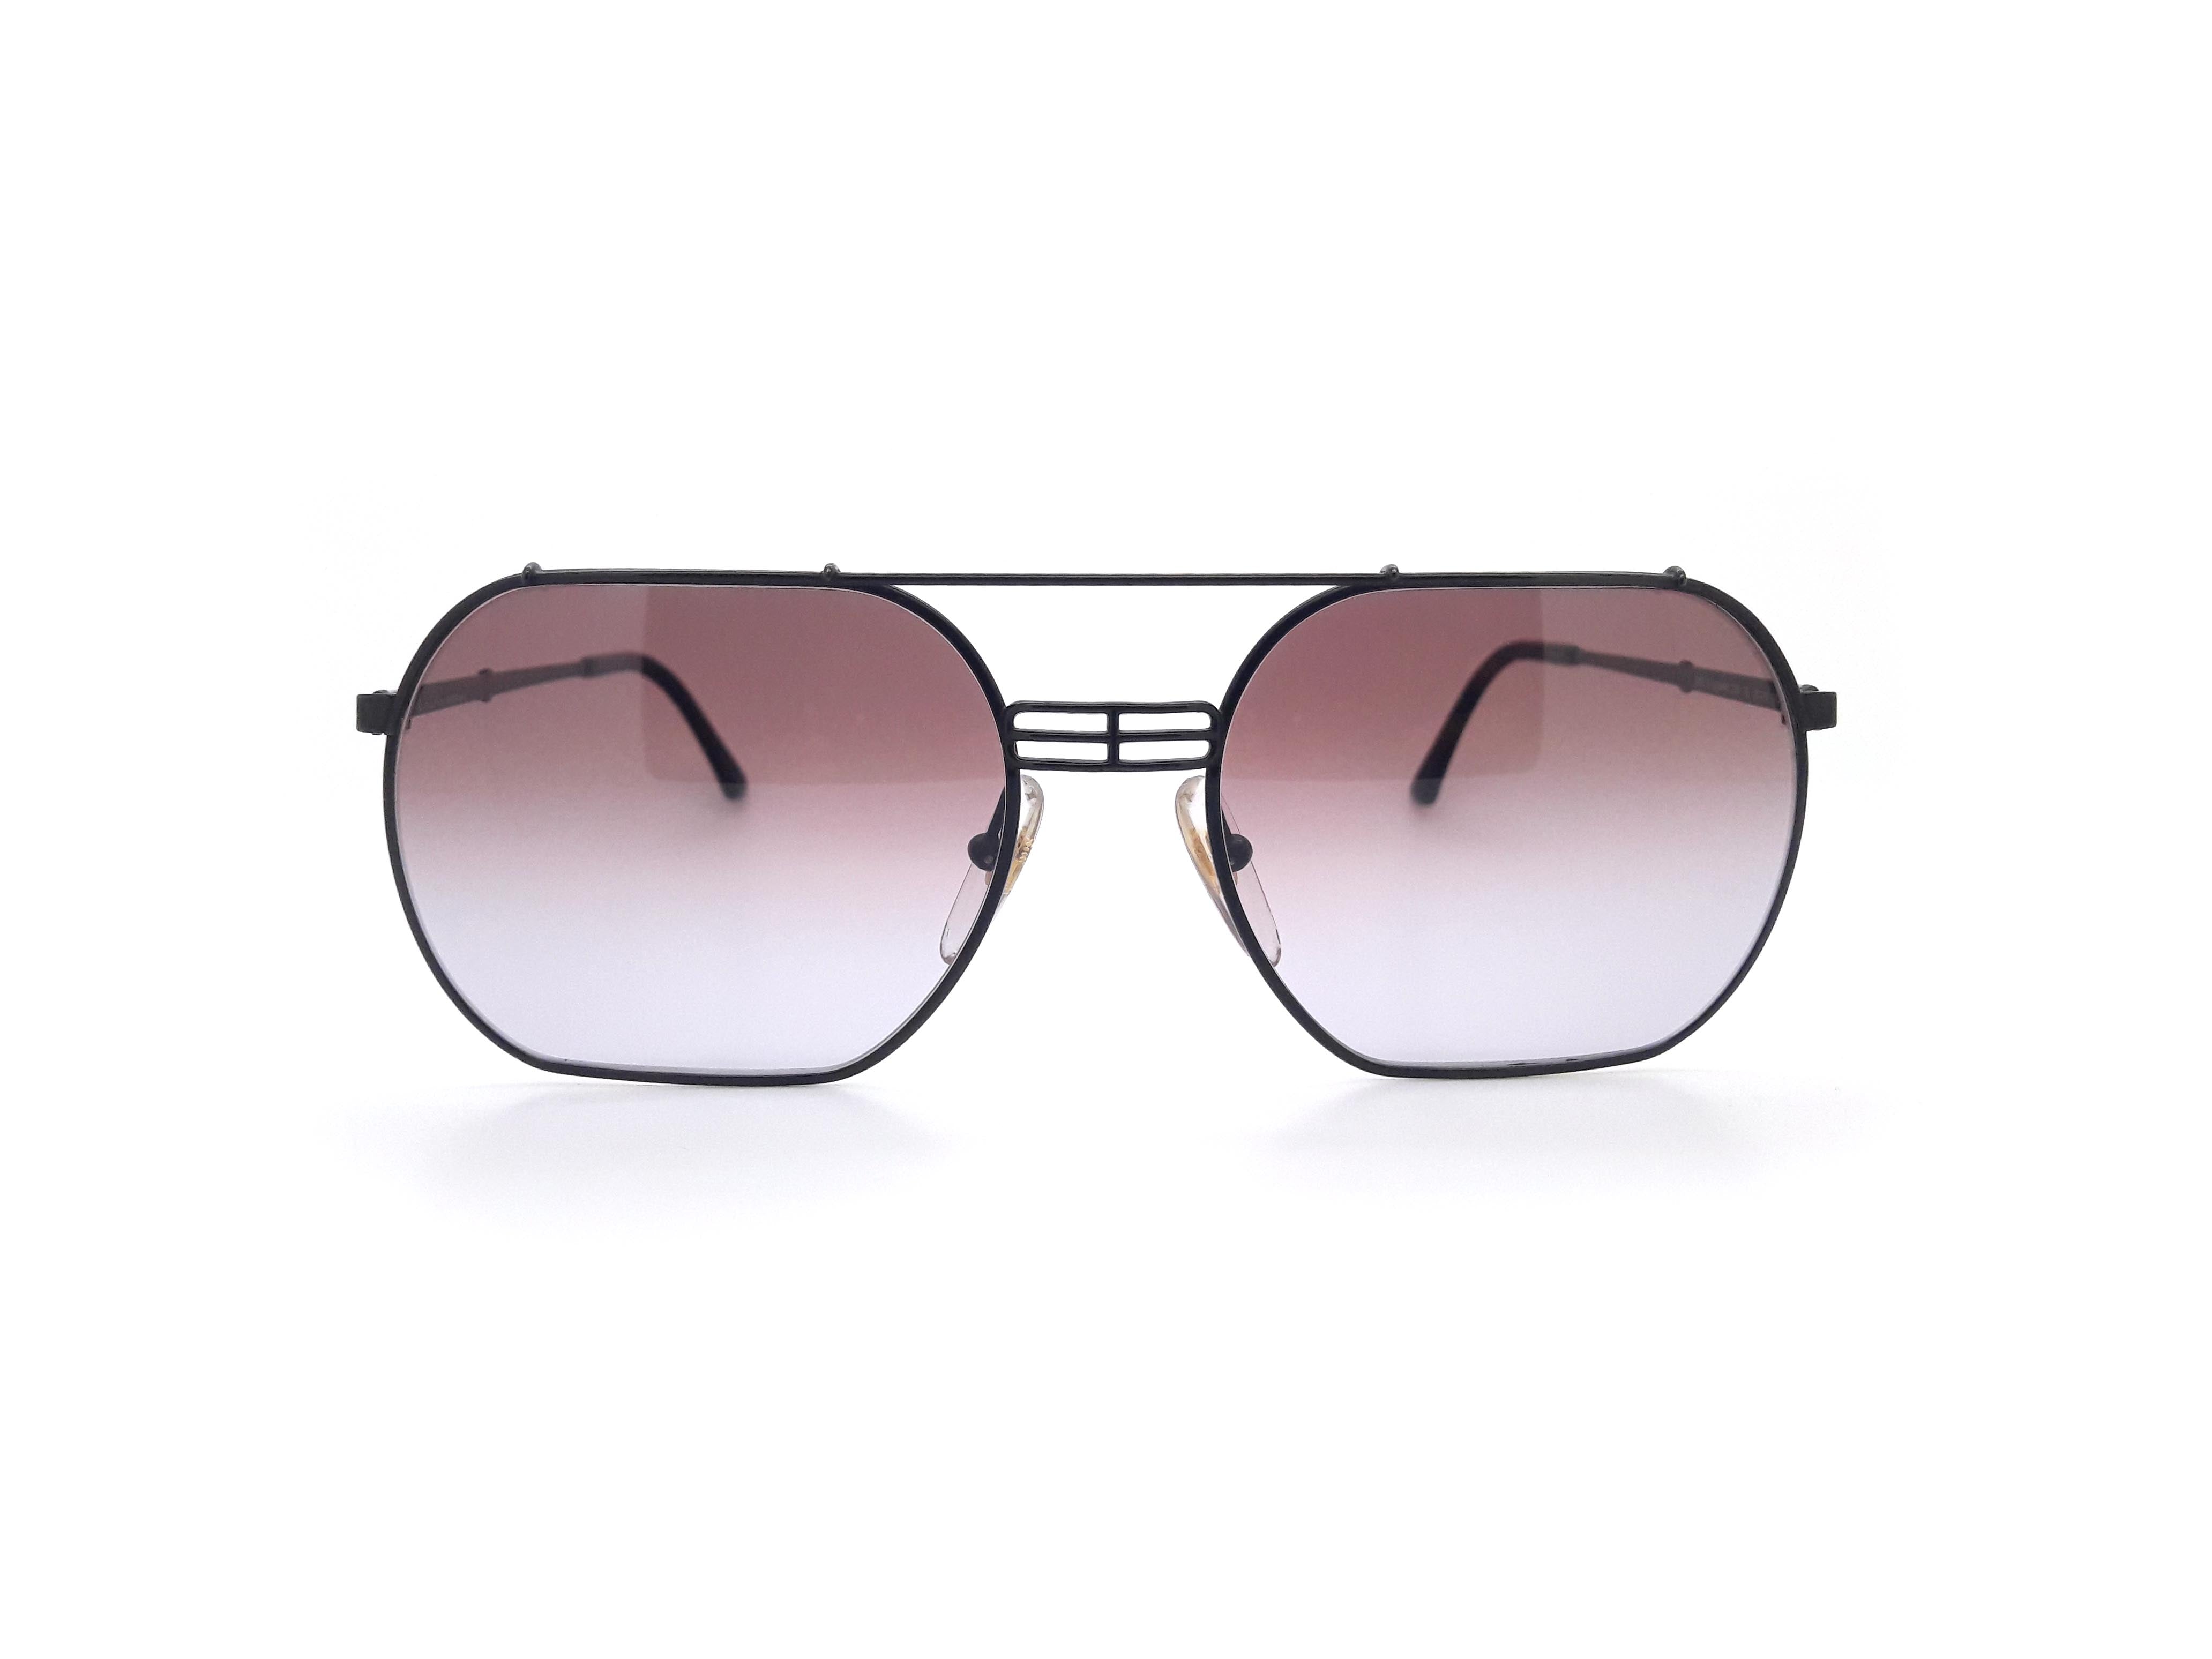 Dior  Accessories  New Christian Dior 58mm Pilot Sunglasses  Poshmark